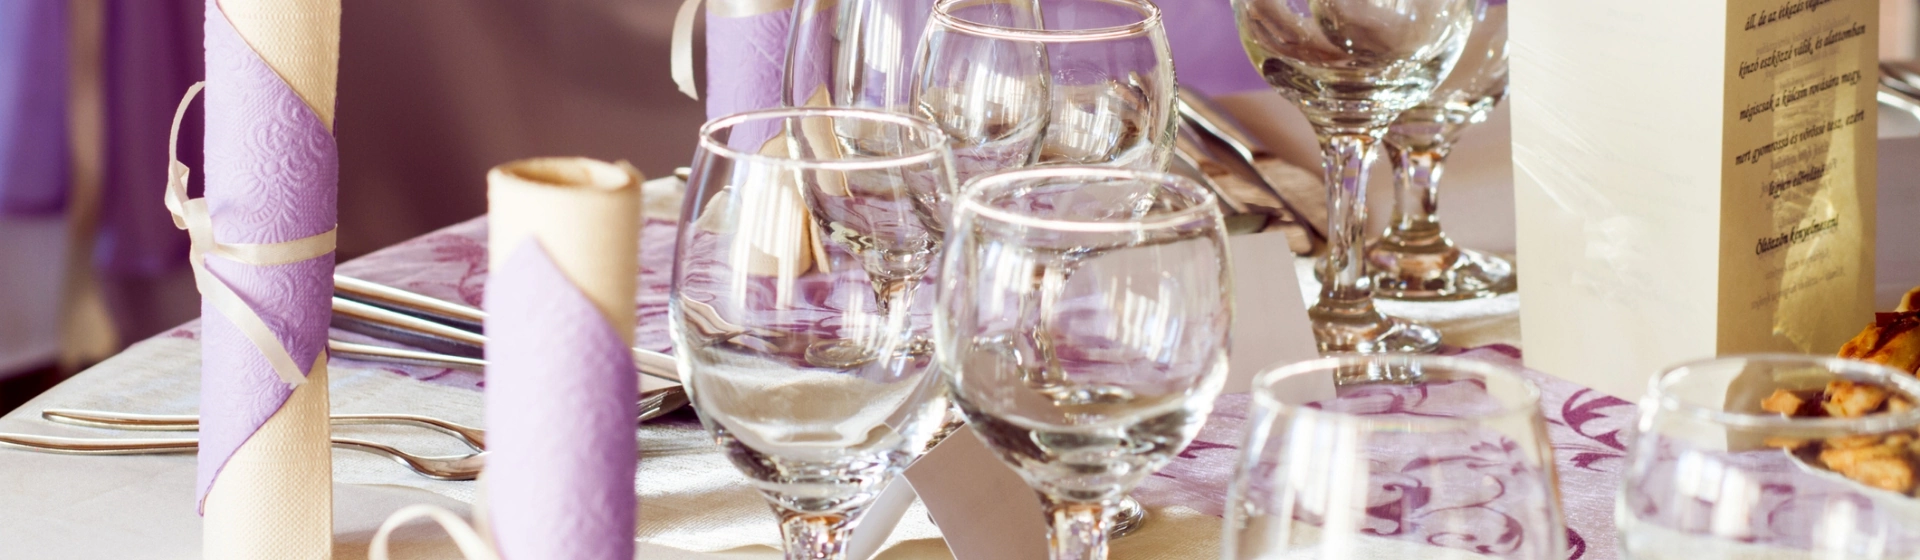 szklanki i kieliszki na stole